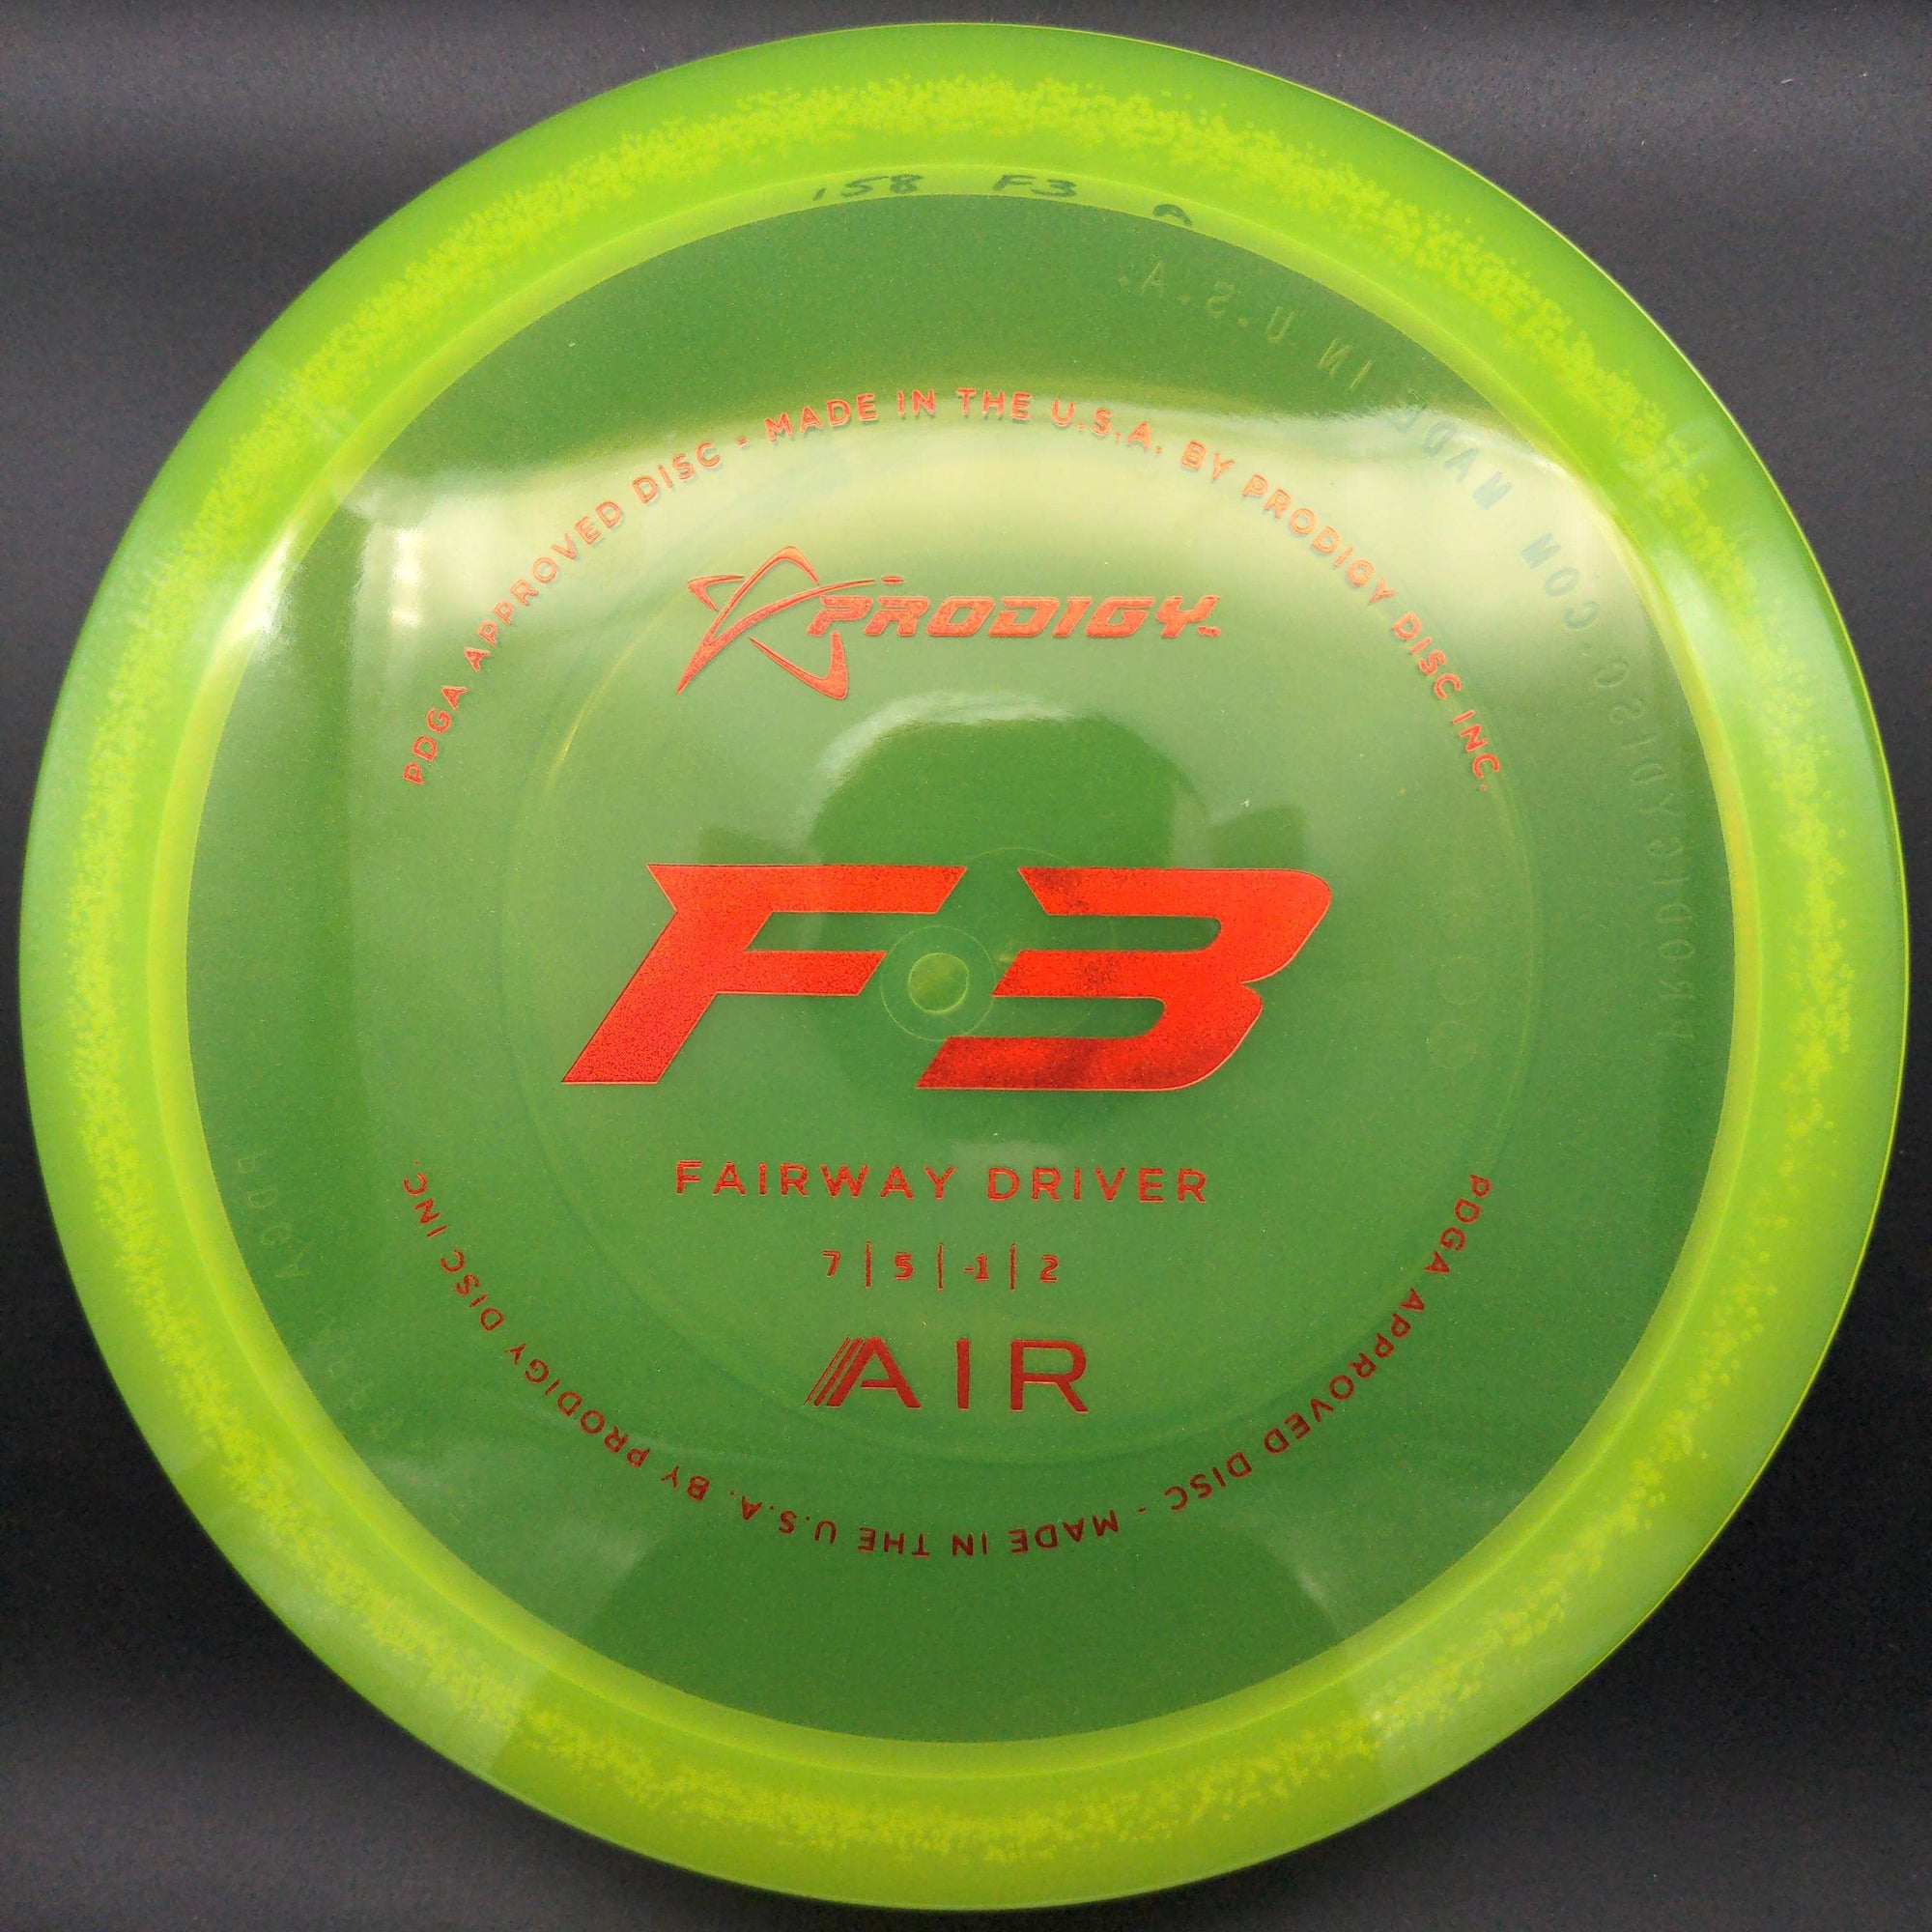 Prodigy Fairway Driver F3, Air Plastic